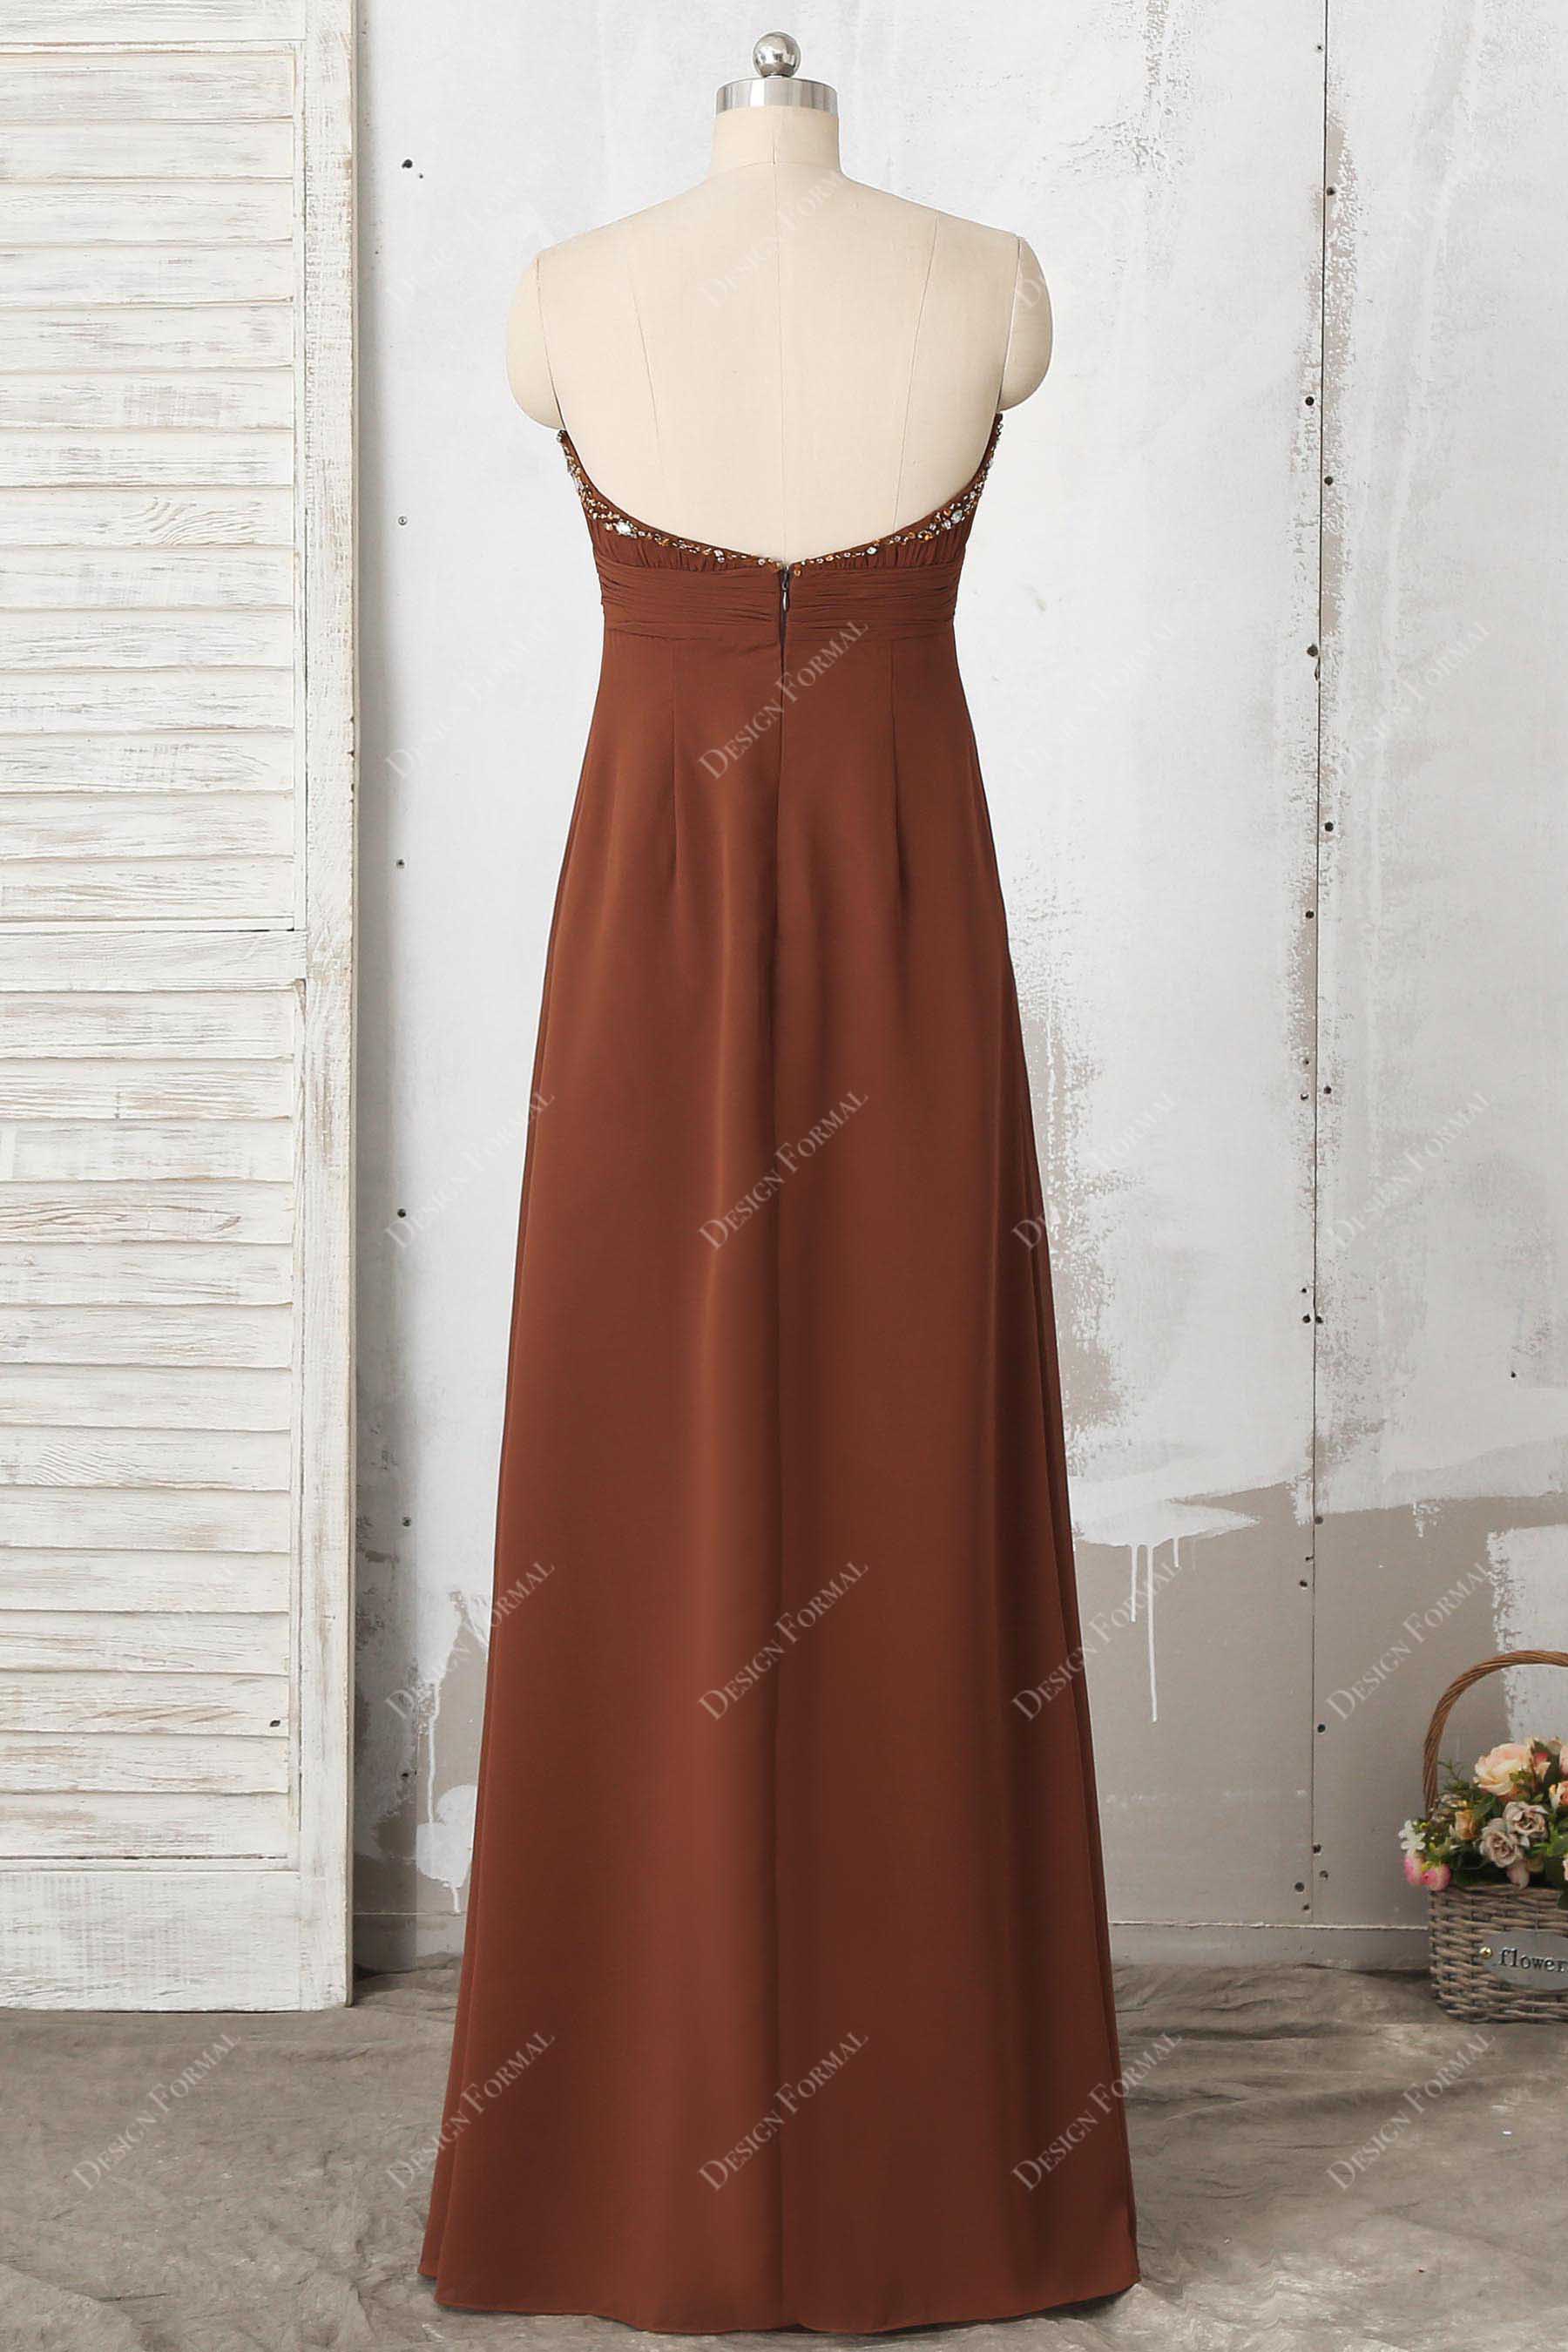 brown chiffon floor length bridesmaid dress 